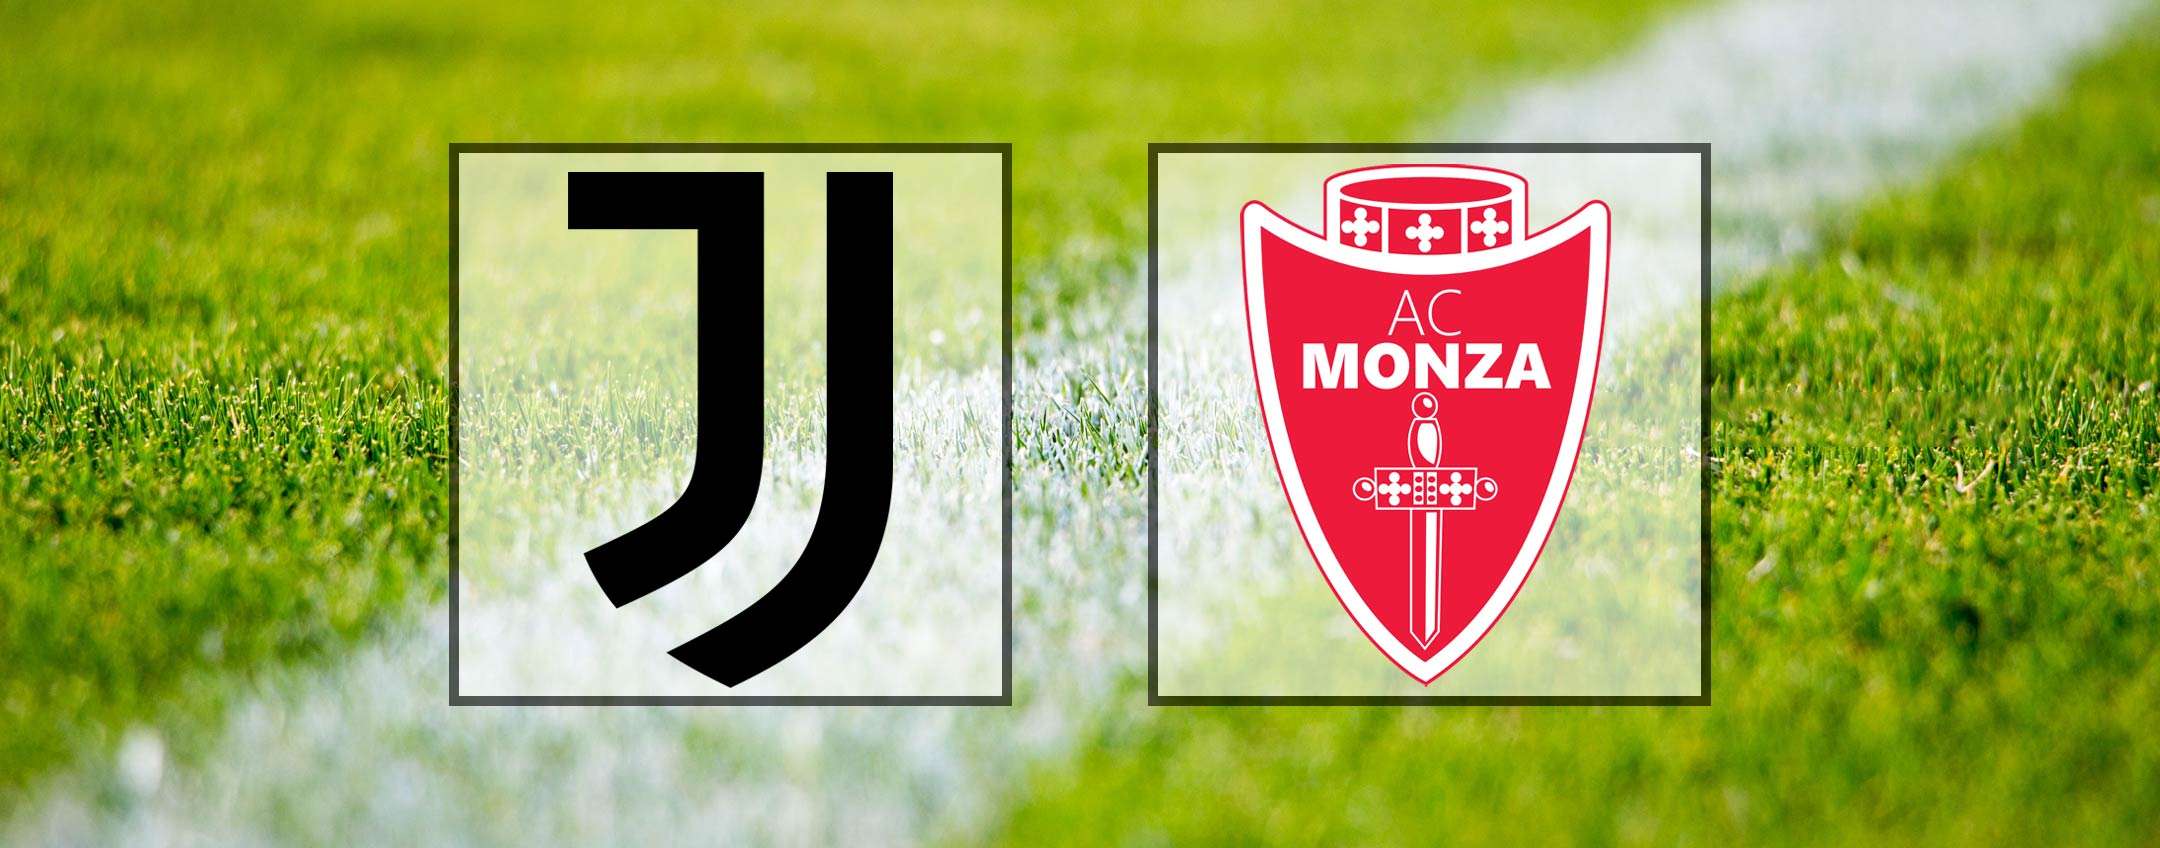 Come vedere Juventus-Monza in diretta streaming (Serie A)